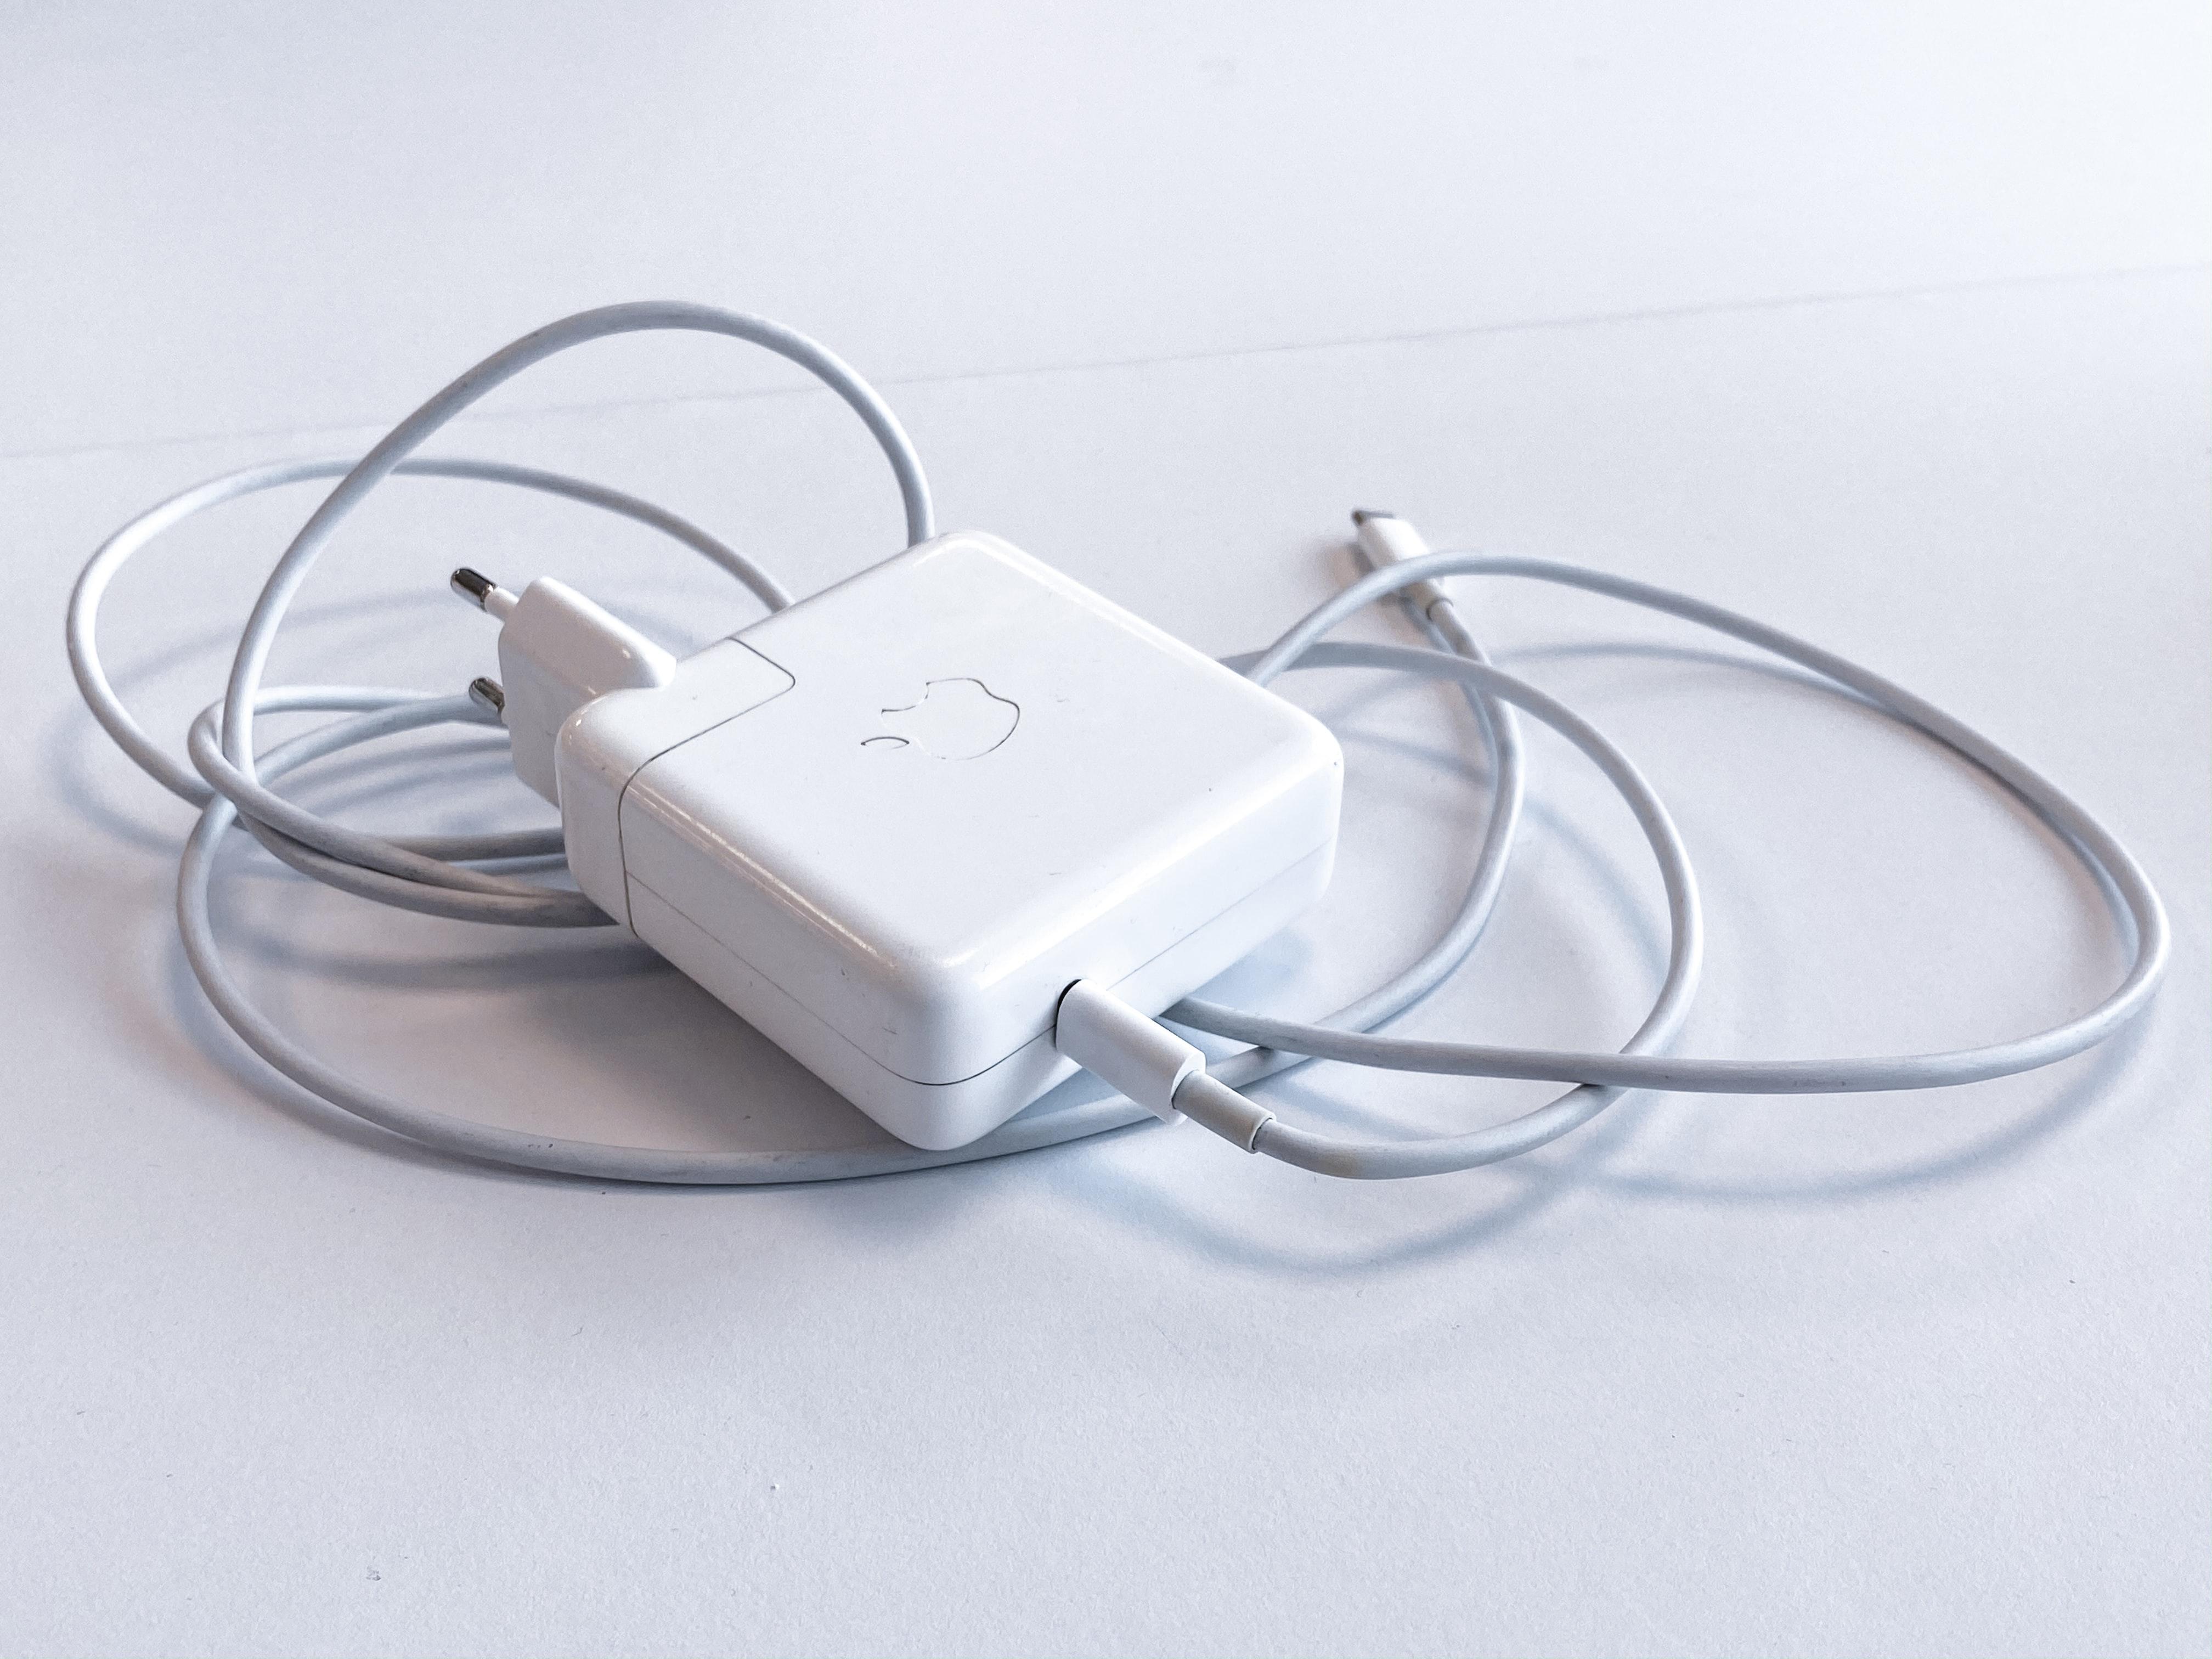 Apple charging cord